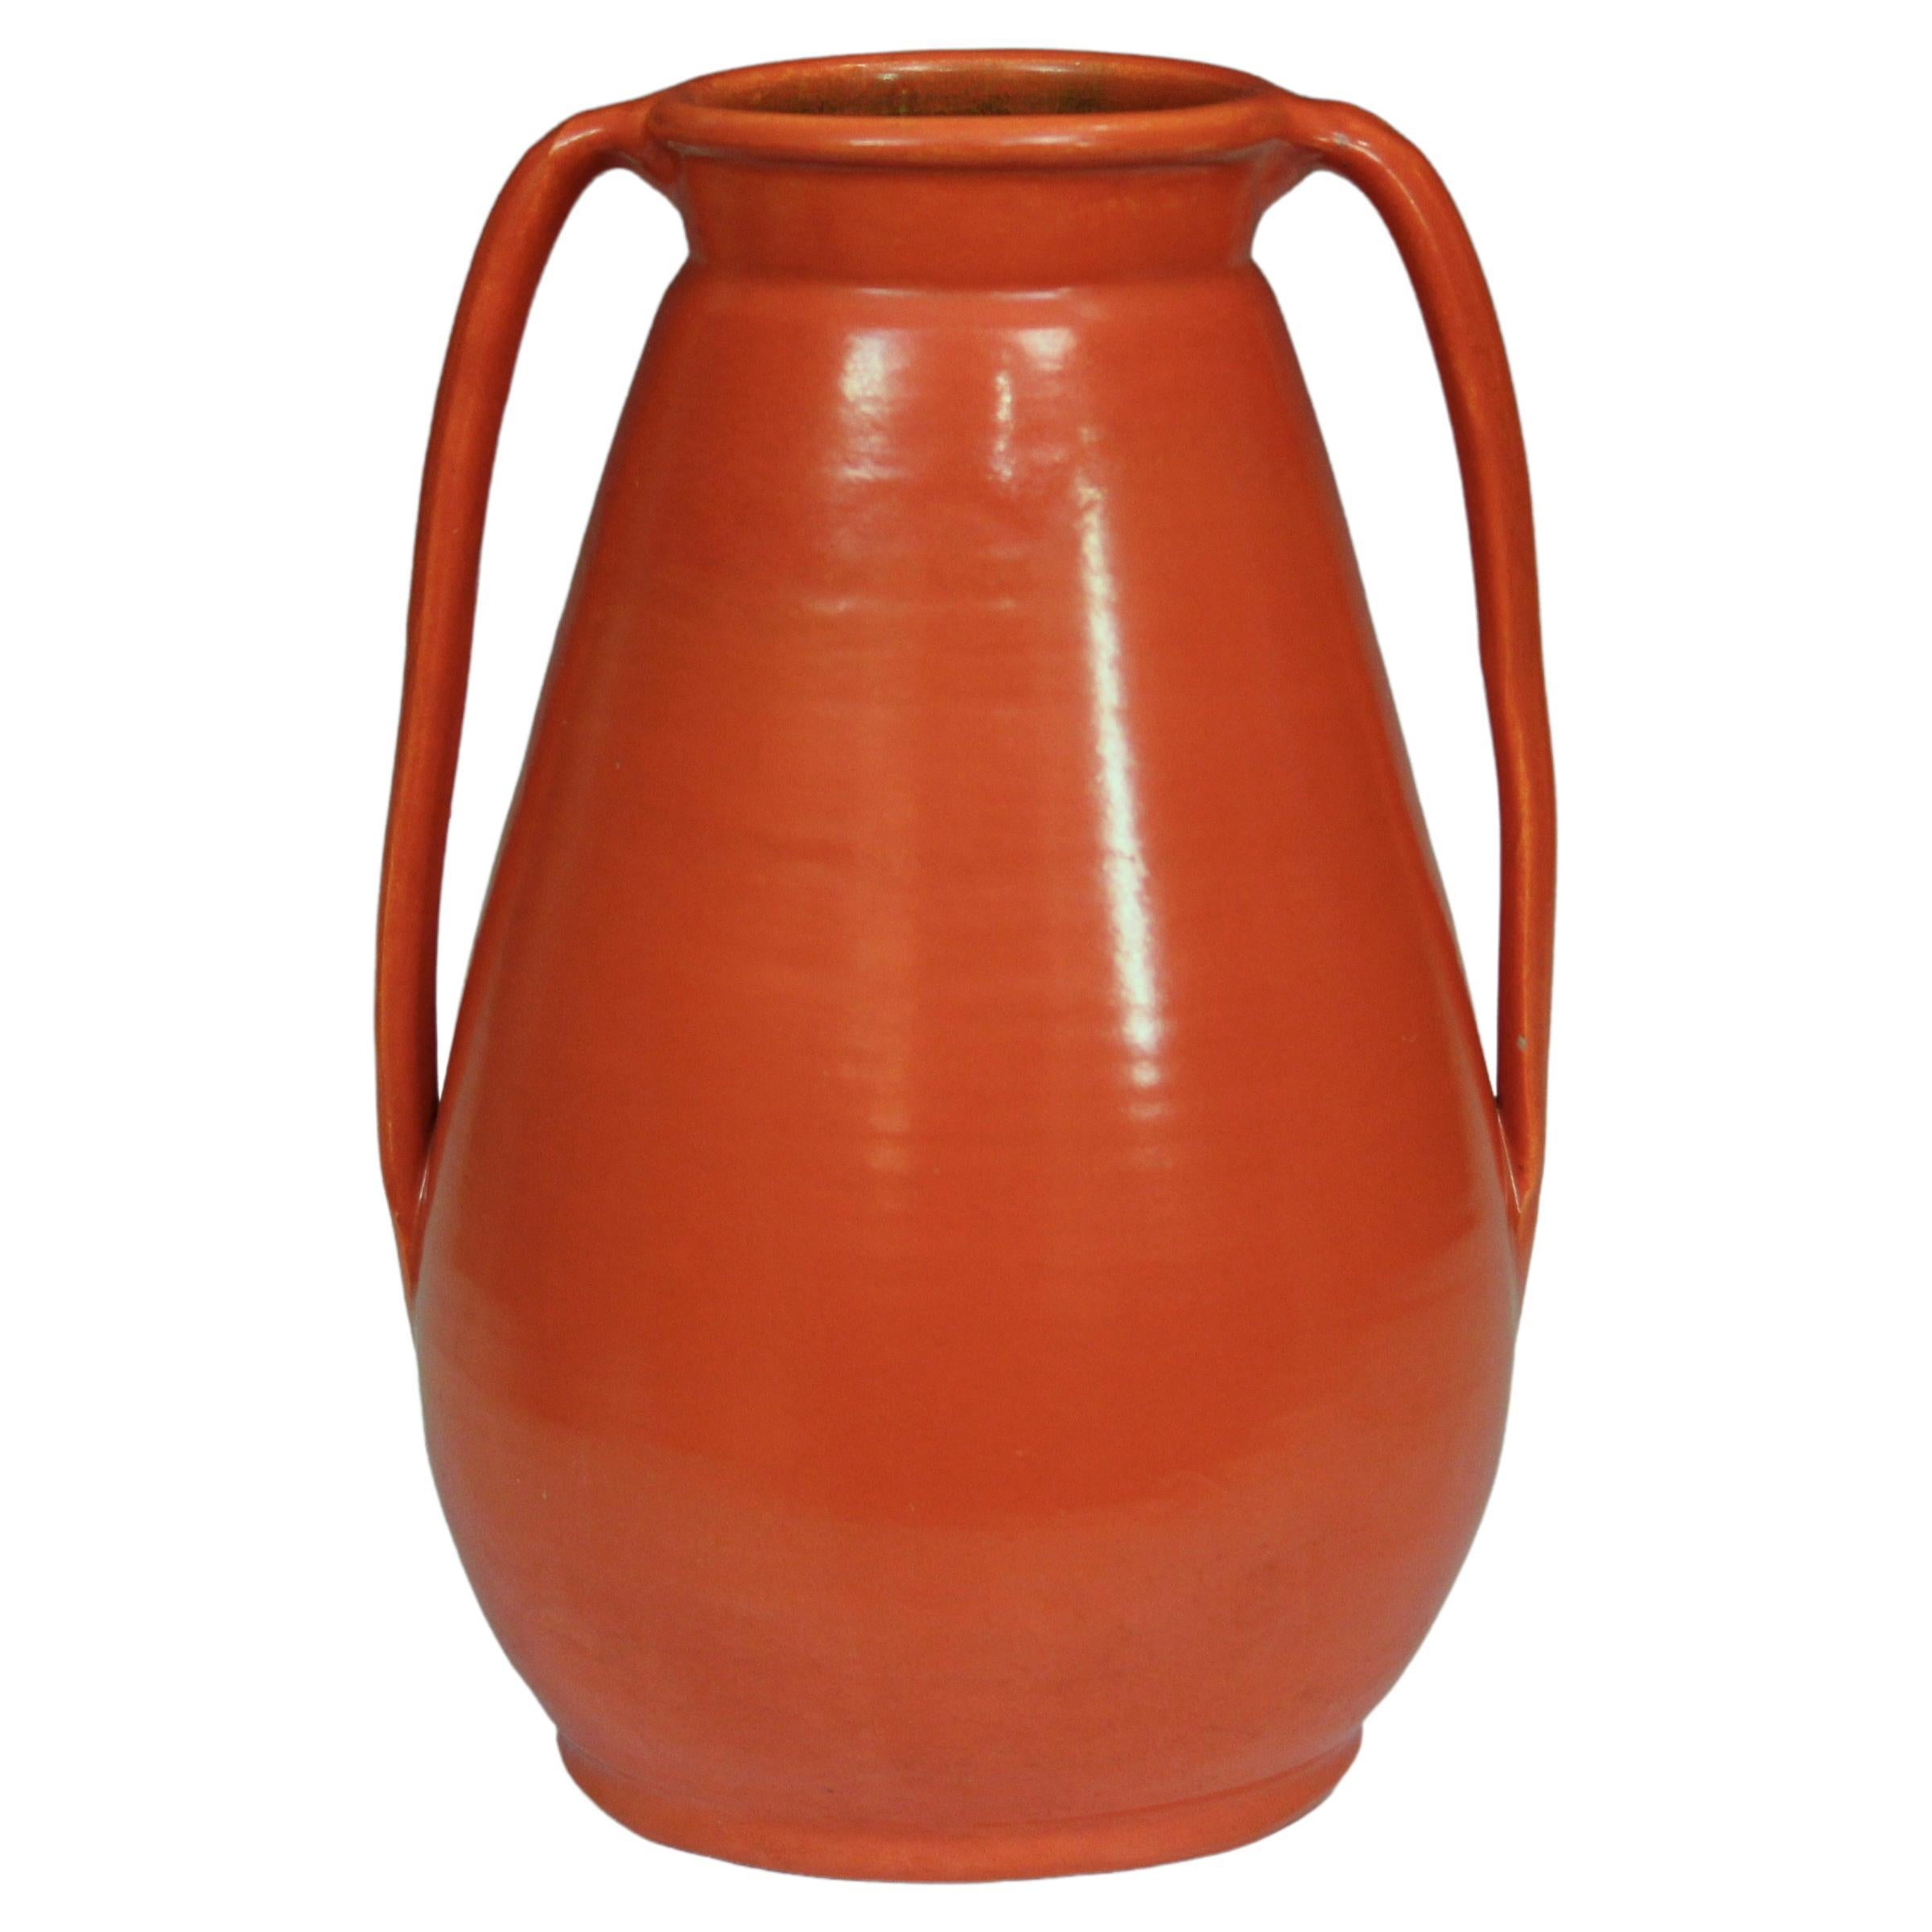 Stangl Pottery Vase Art Deco Chrome Orange Red Vintage Large American